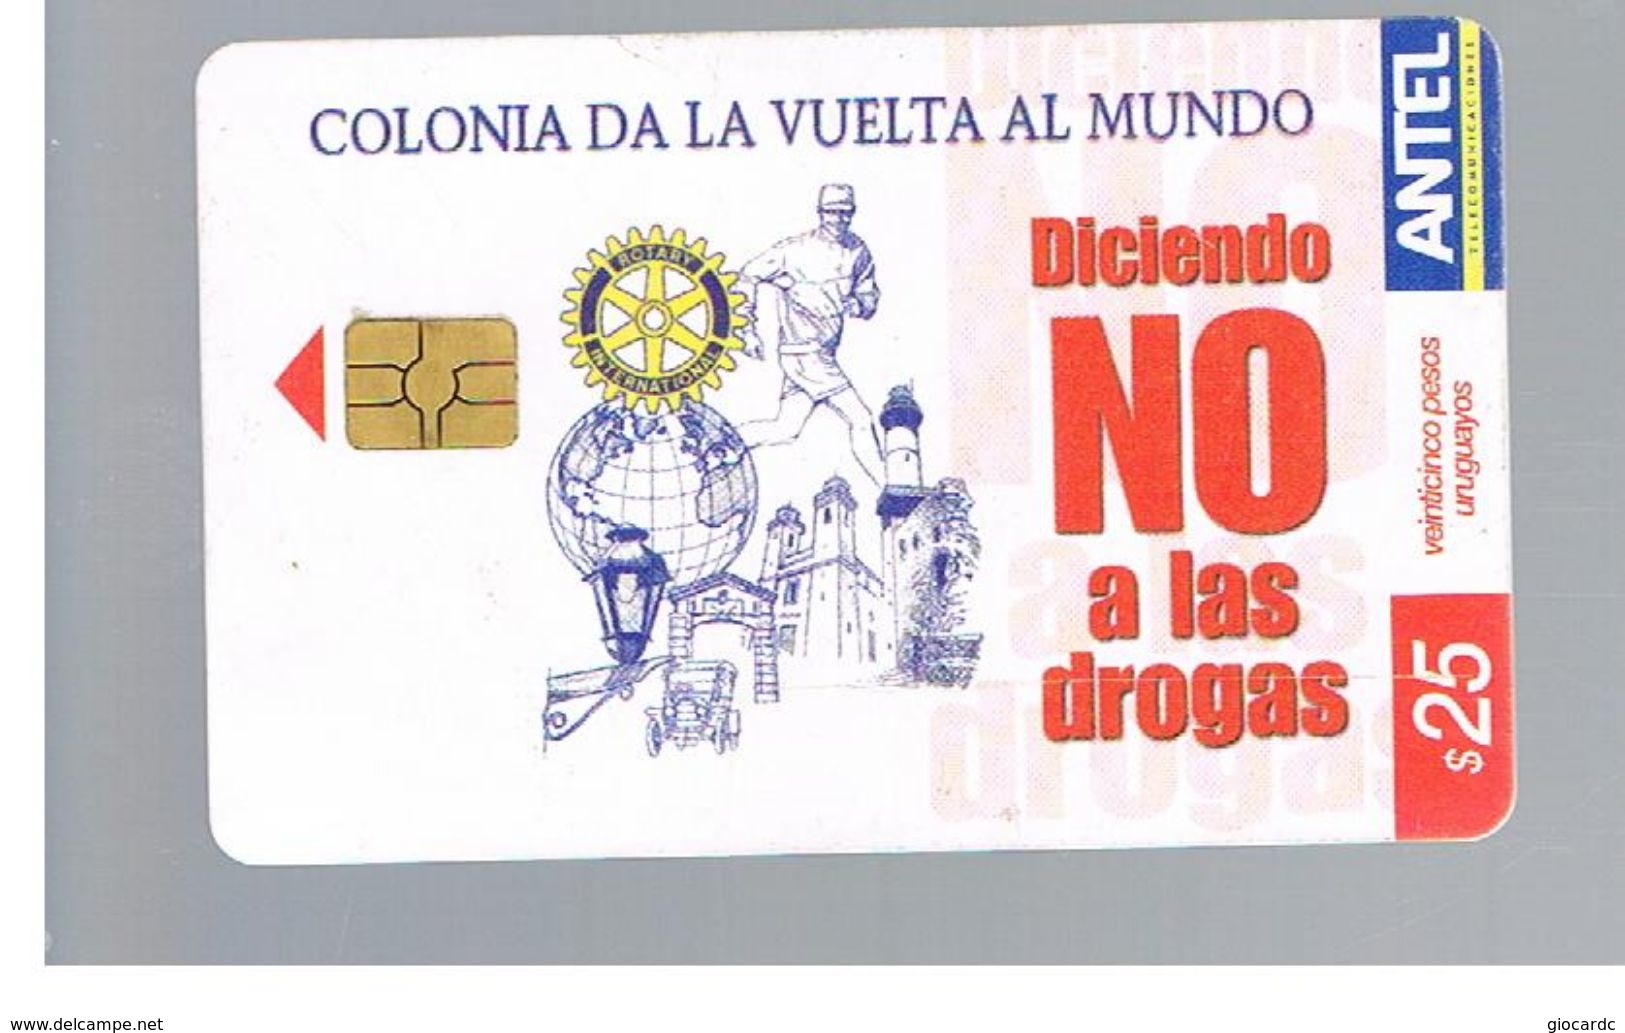 URUGUAY -   2005 NO DRUGS   - USED  -  RIF. 10464 - Uruguay